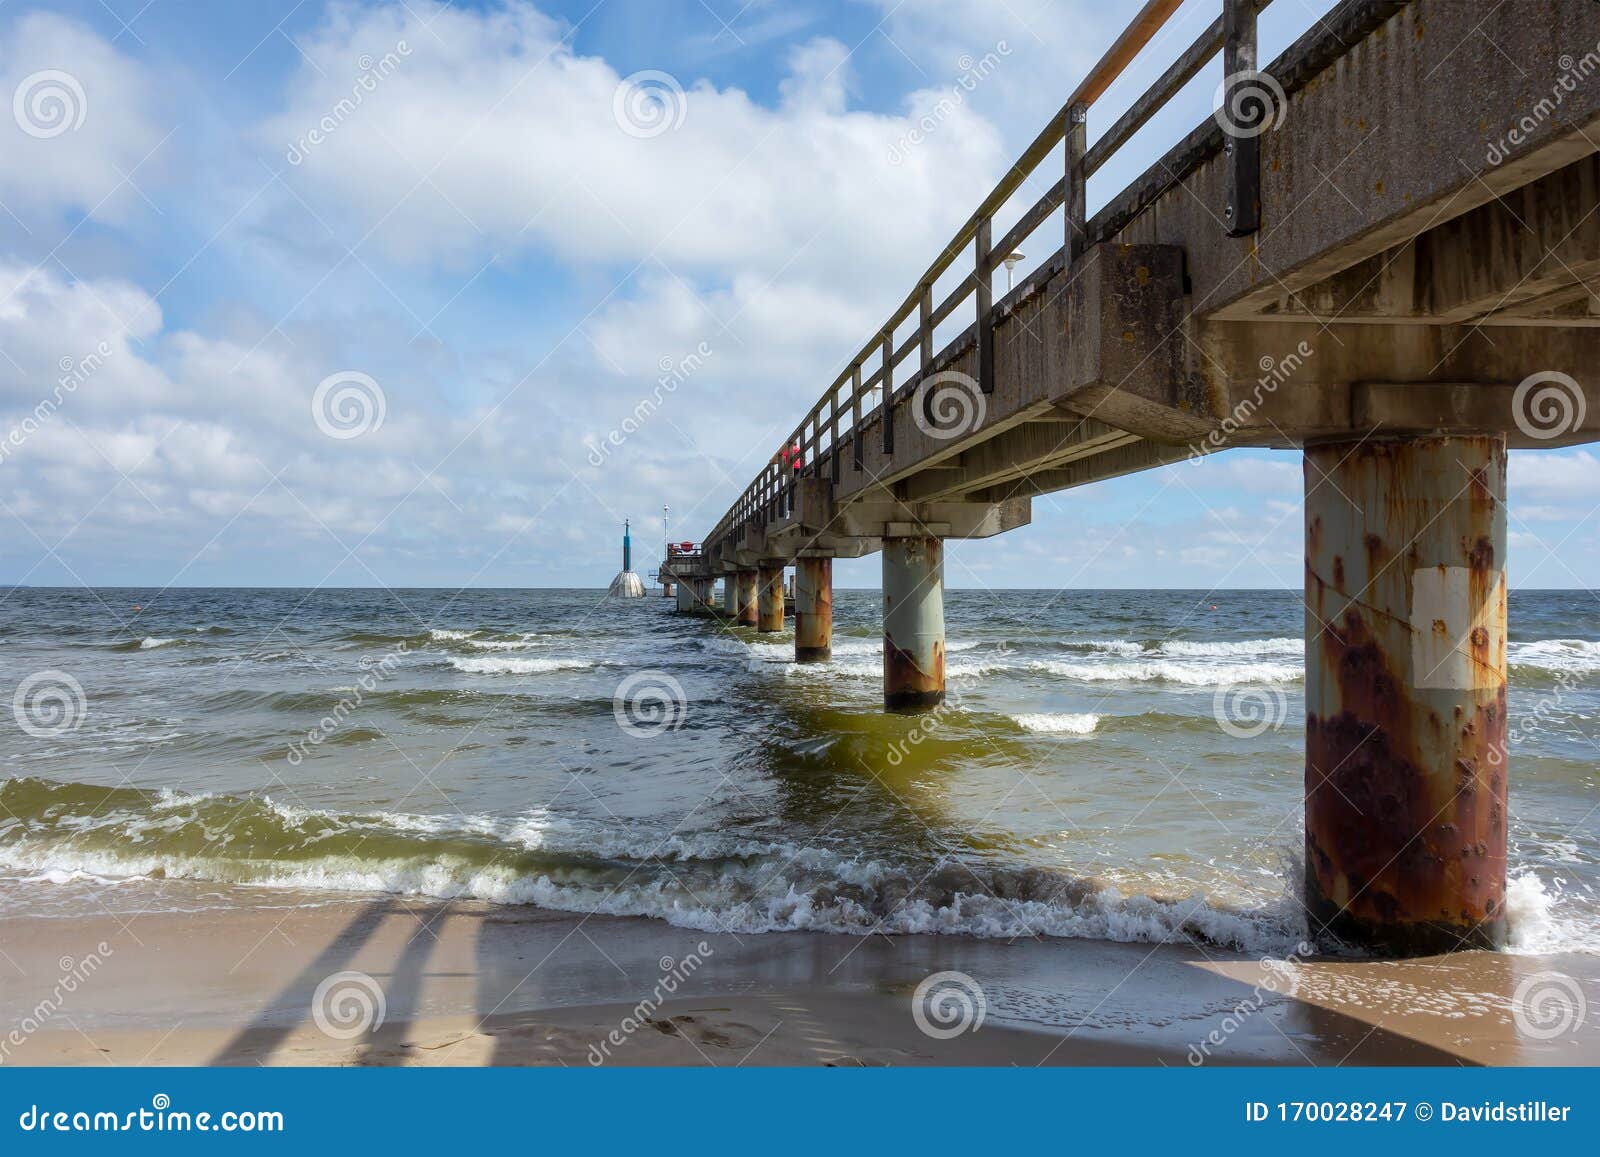 vineta pier, bridge on german island usedom in zinnowitz, germany